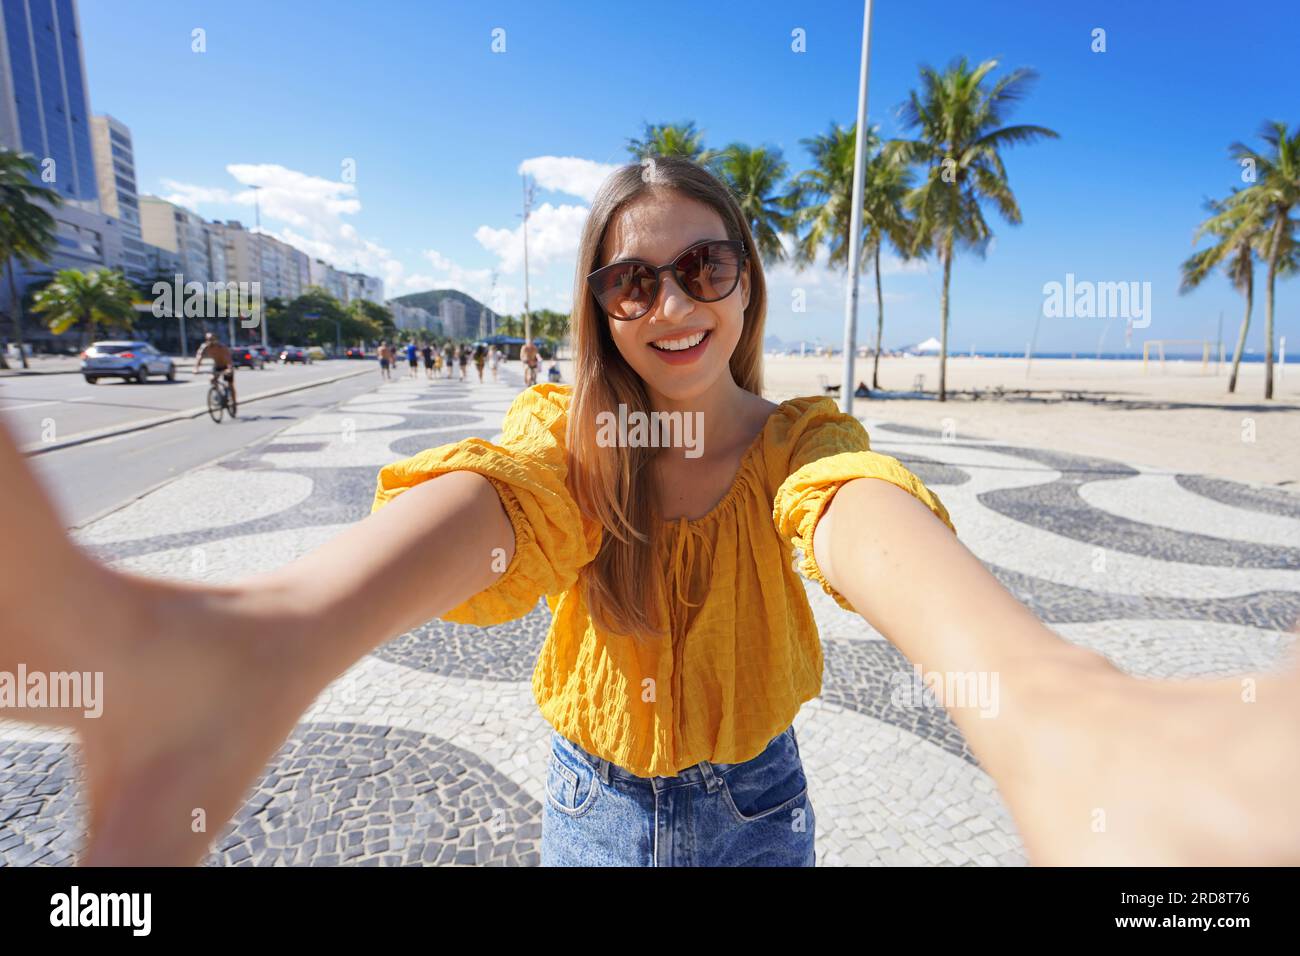 Tourism in Rio de Janeiro. Beautiful smiling girl takes self portrait on Copacabana beach promenade, Rio de Janeiro, Brazil. Stock Photo